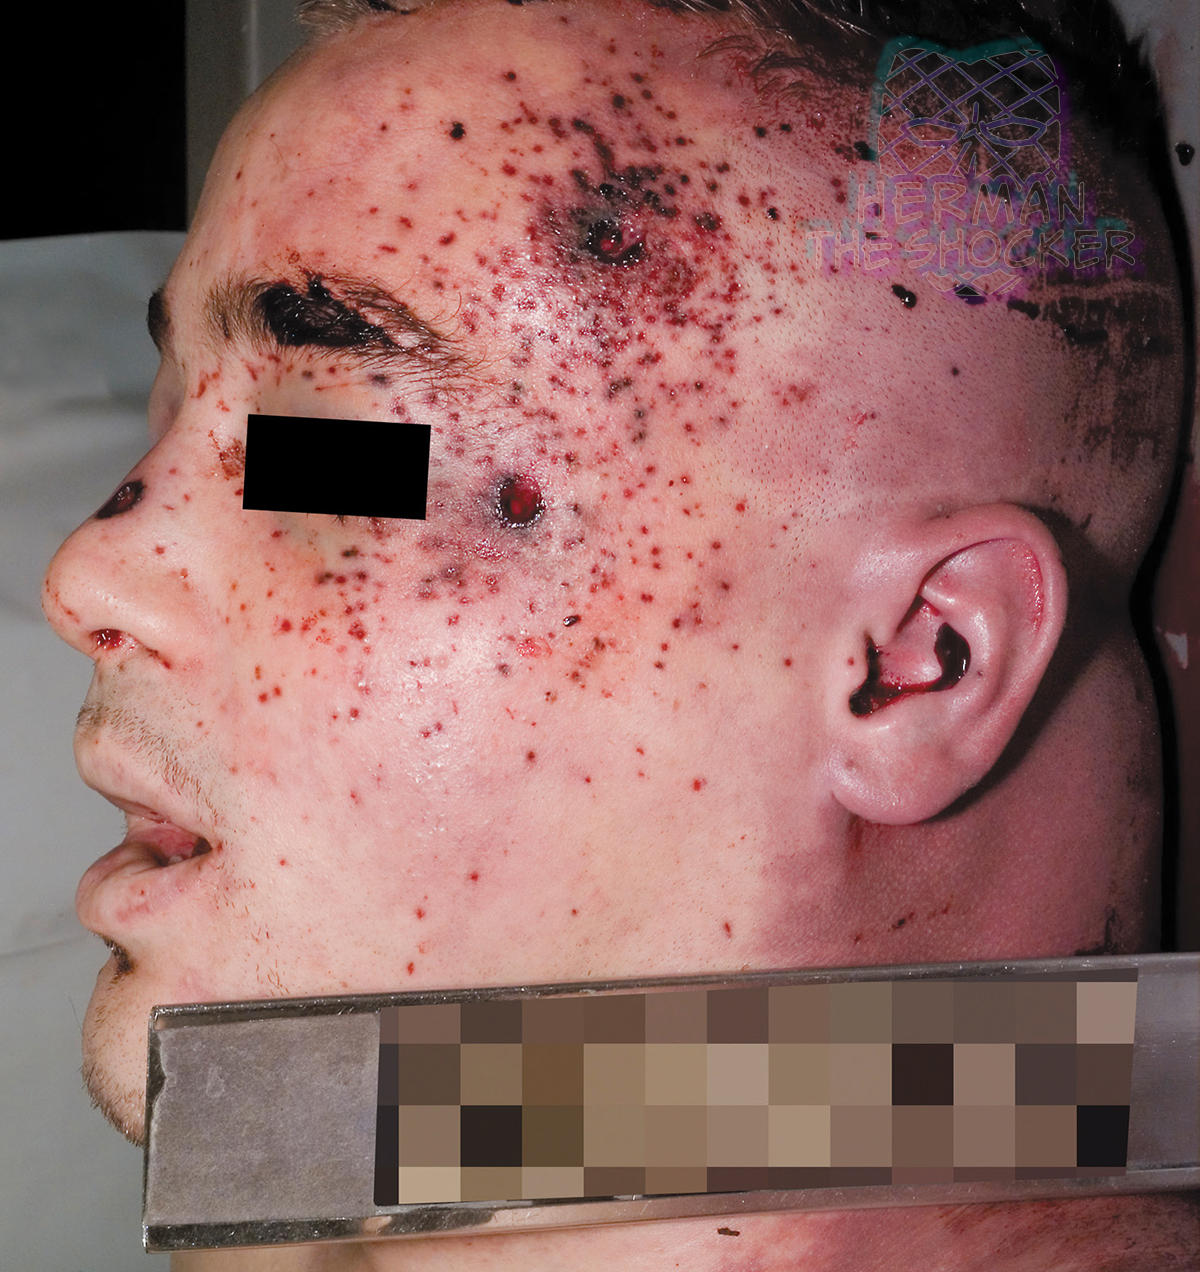 Stippling around gunshot entrance wounds of the face